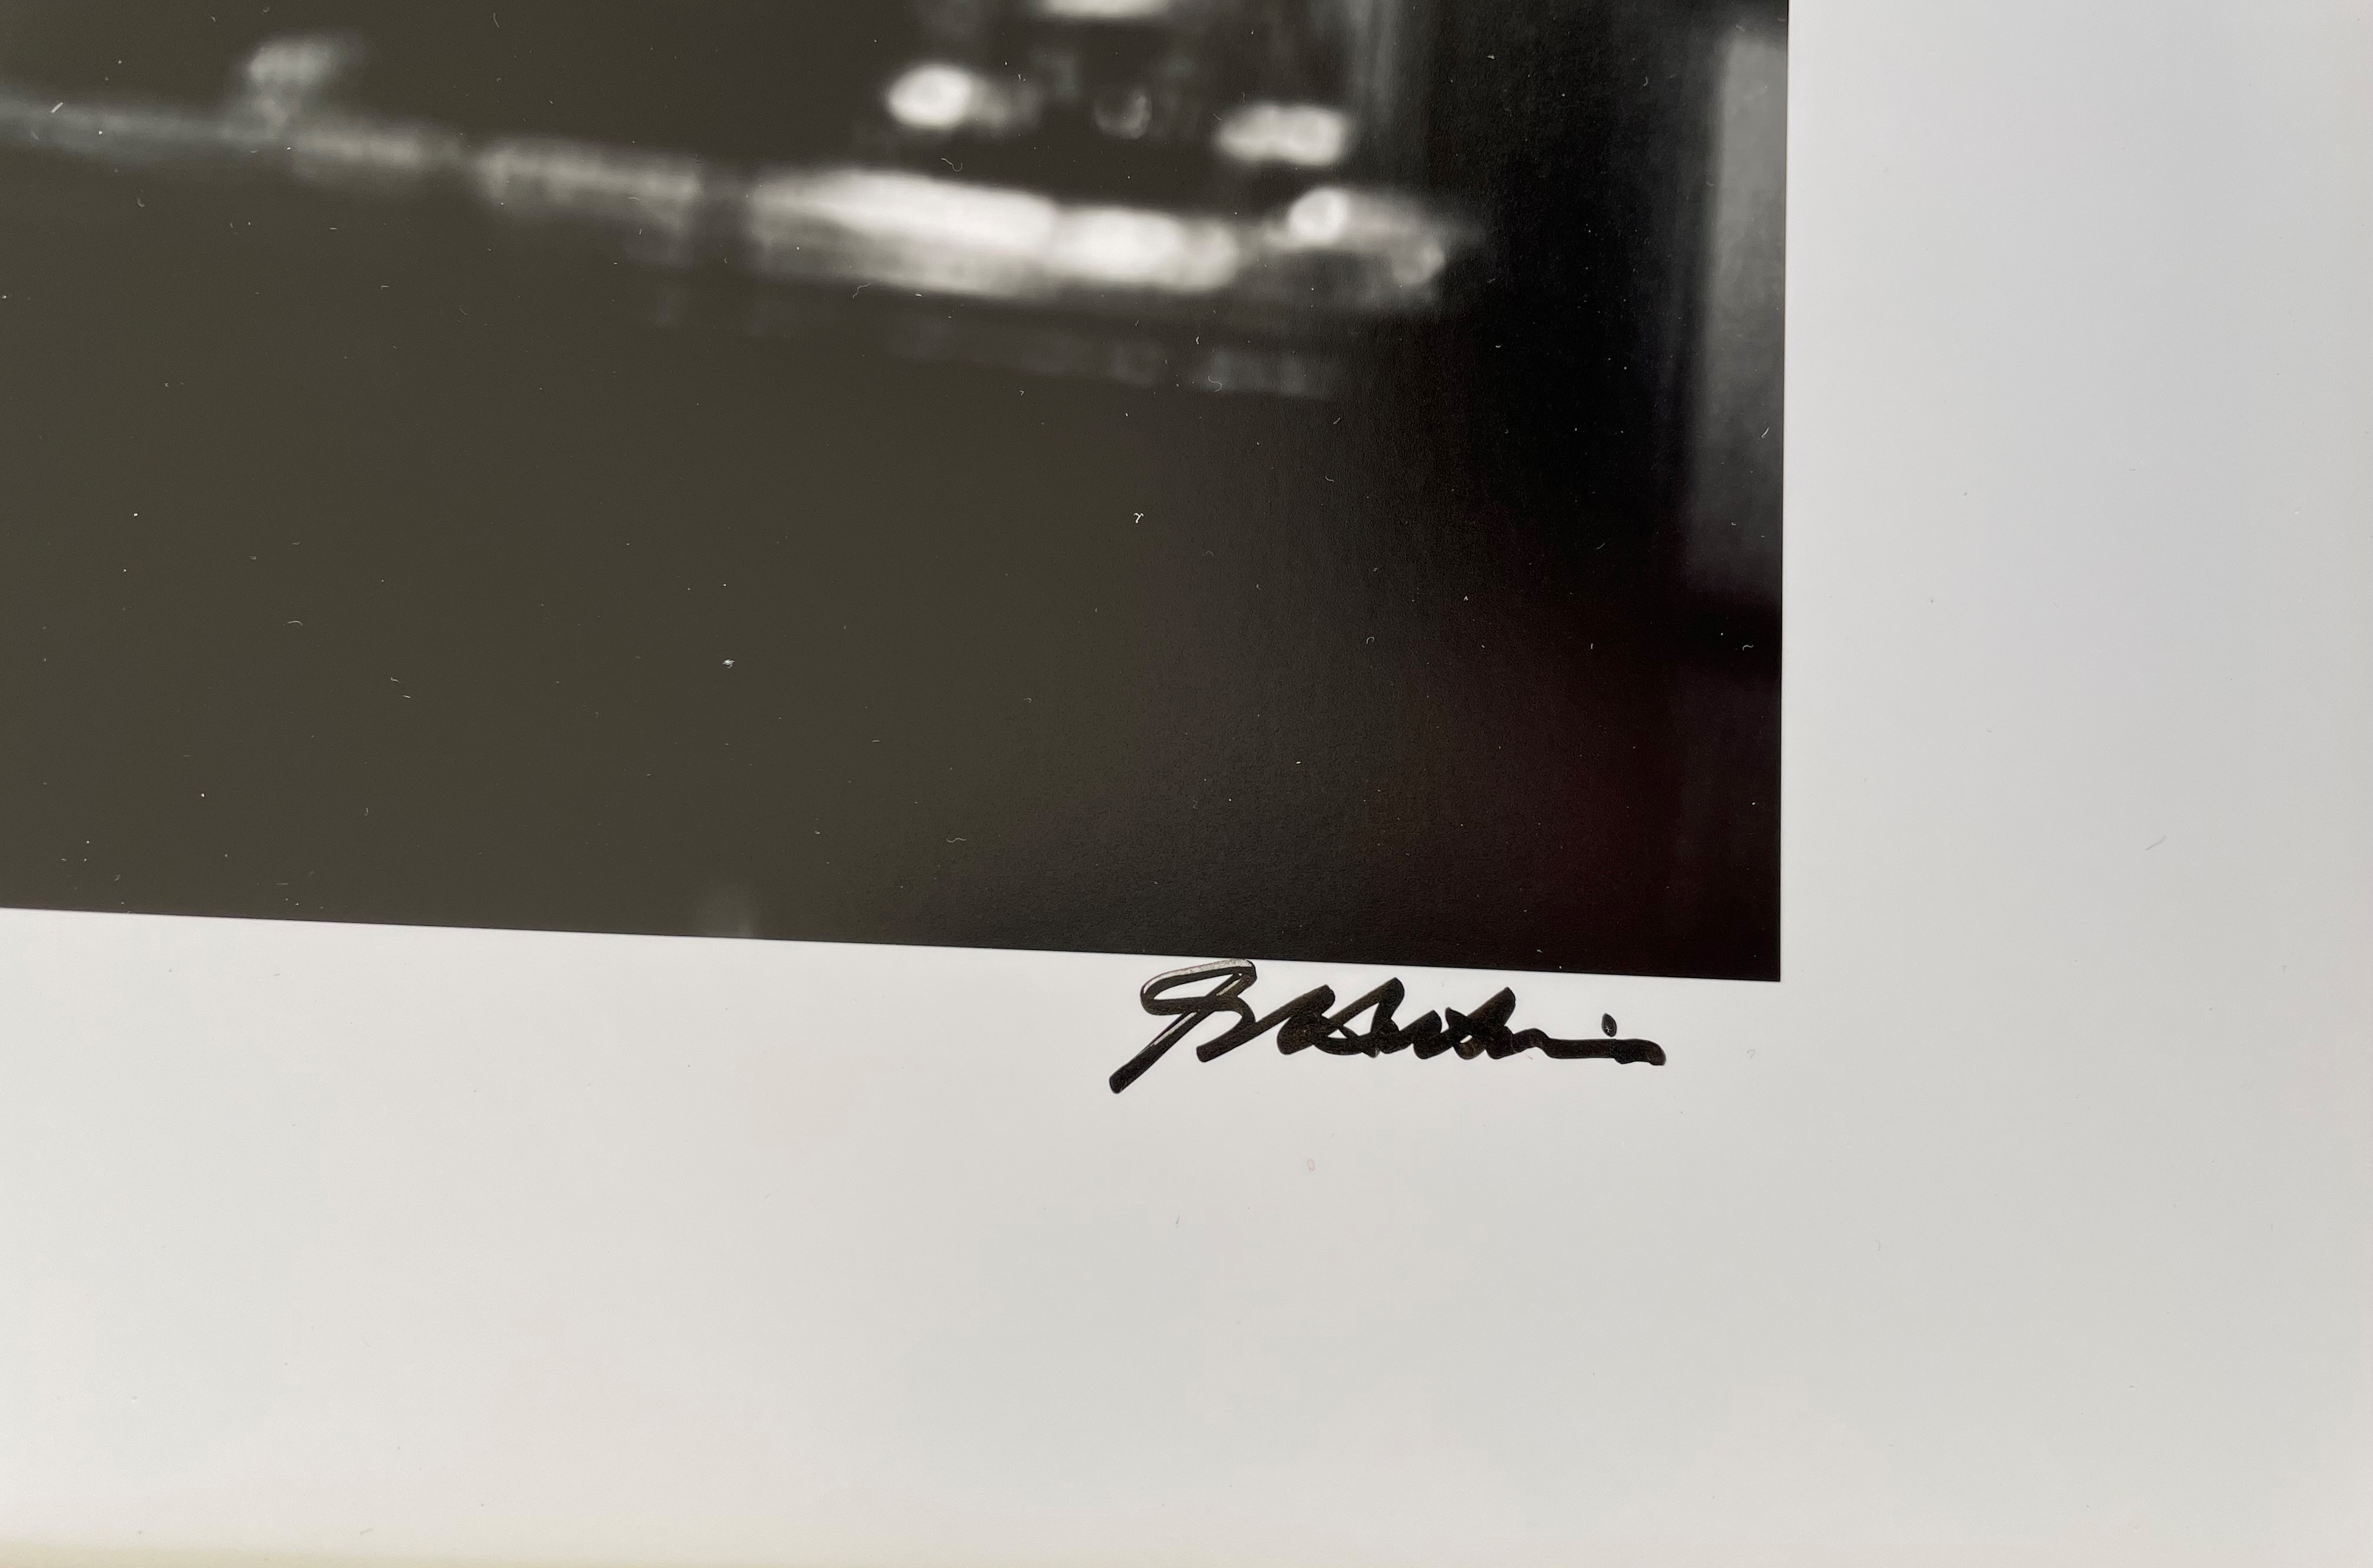 Shahrokh Hatami - Coco Chanel, Hôyel Ritz - Signed photograph - Photography  - Plazzart